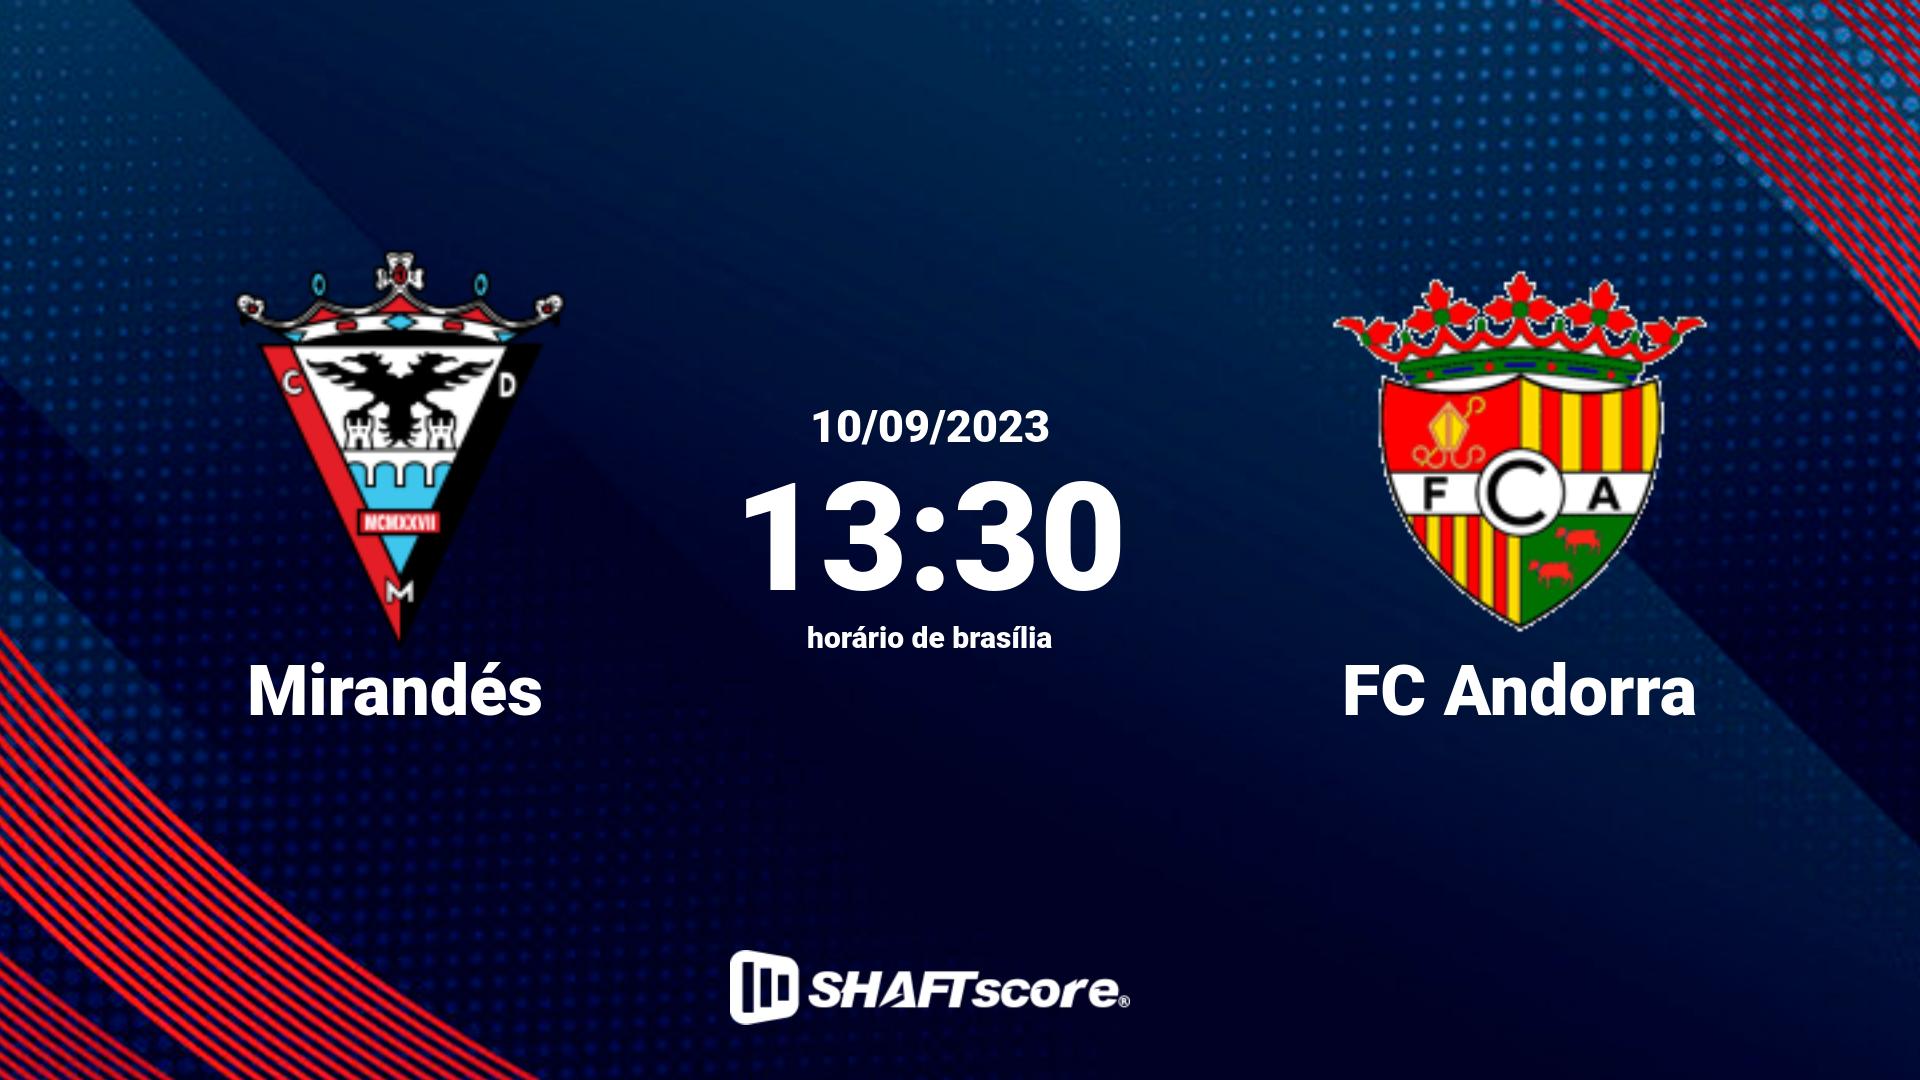 Estatísticas do jogo Mirandés vs FC Andorra 10.09 13:30